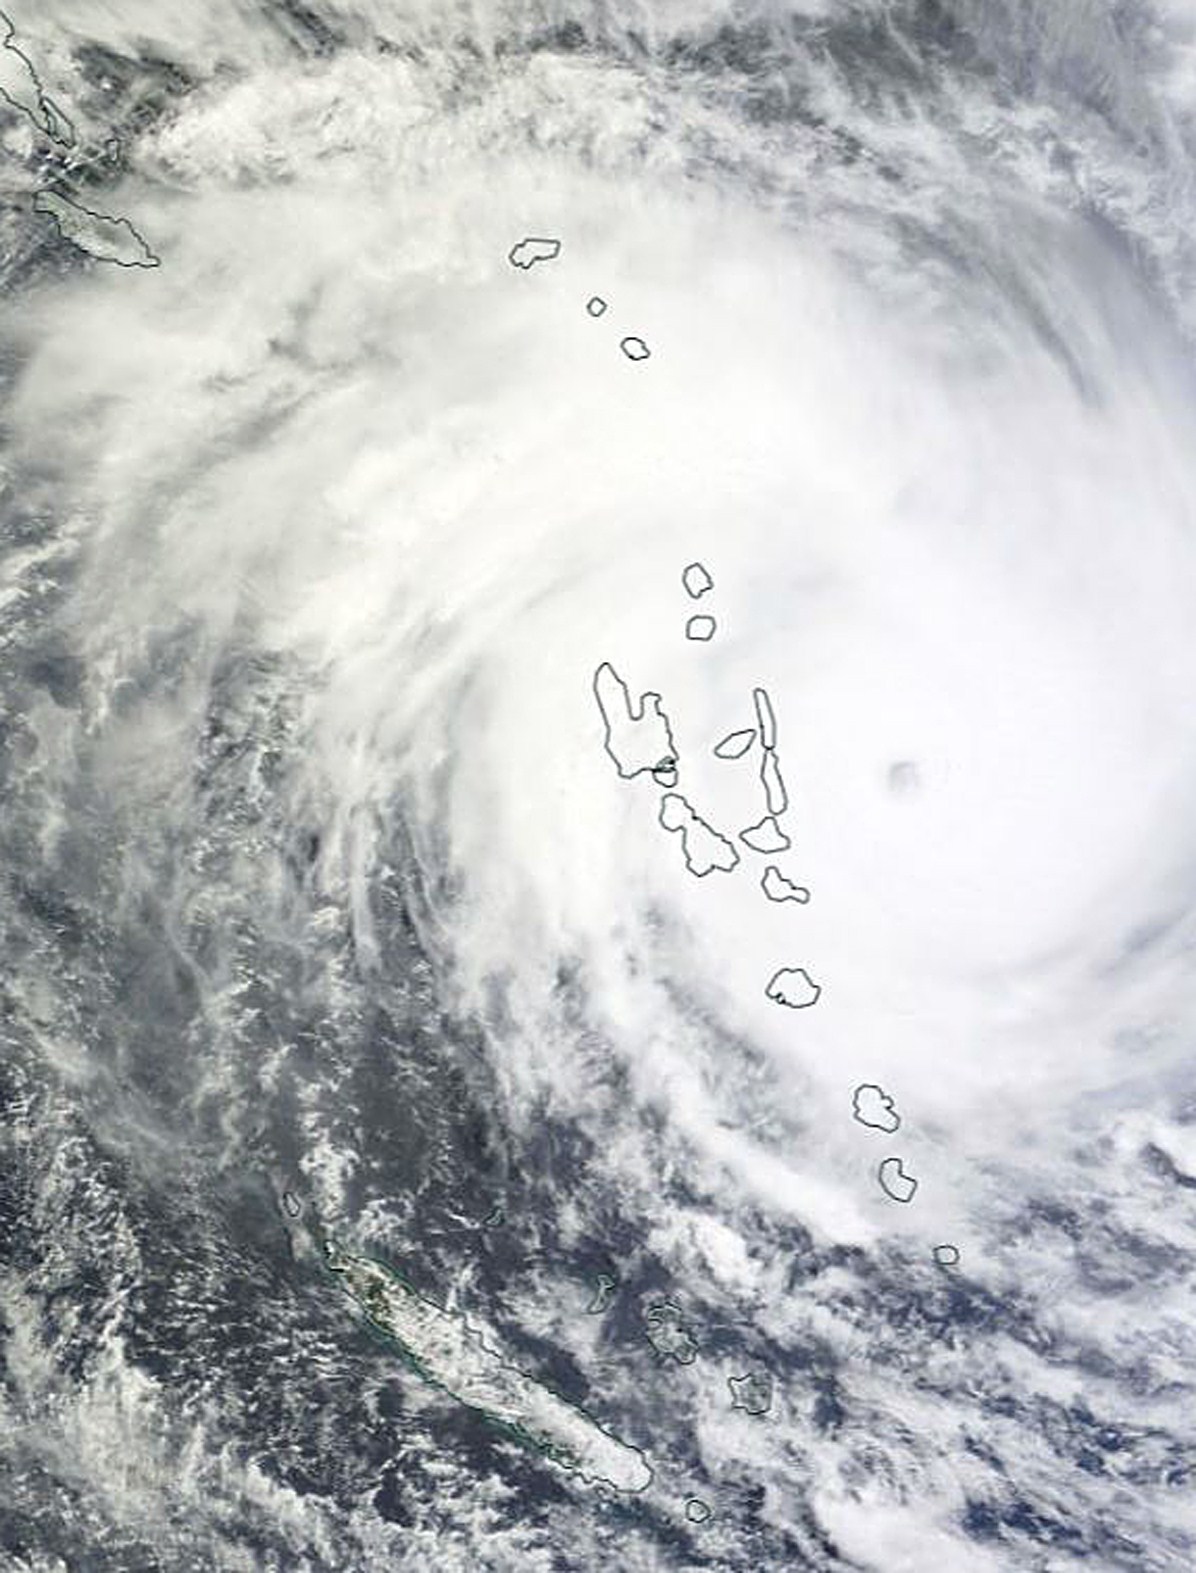 A satellite image of Cyclone Pam over the Pacific Ocean archipelago of Vanuatu